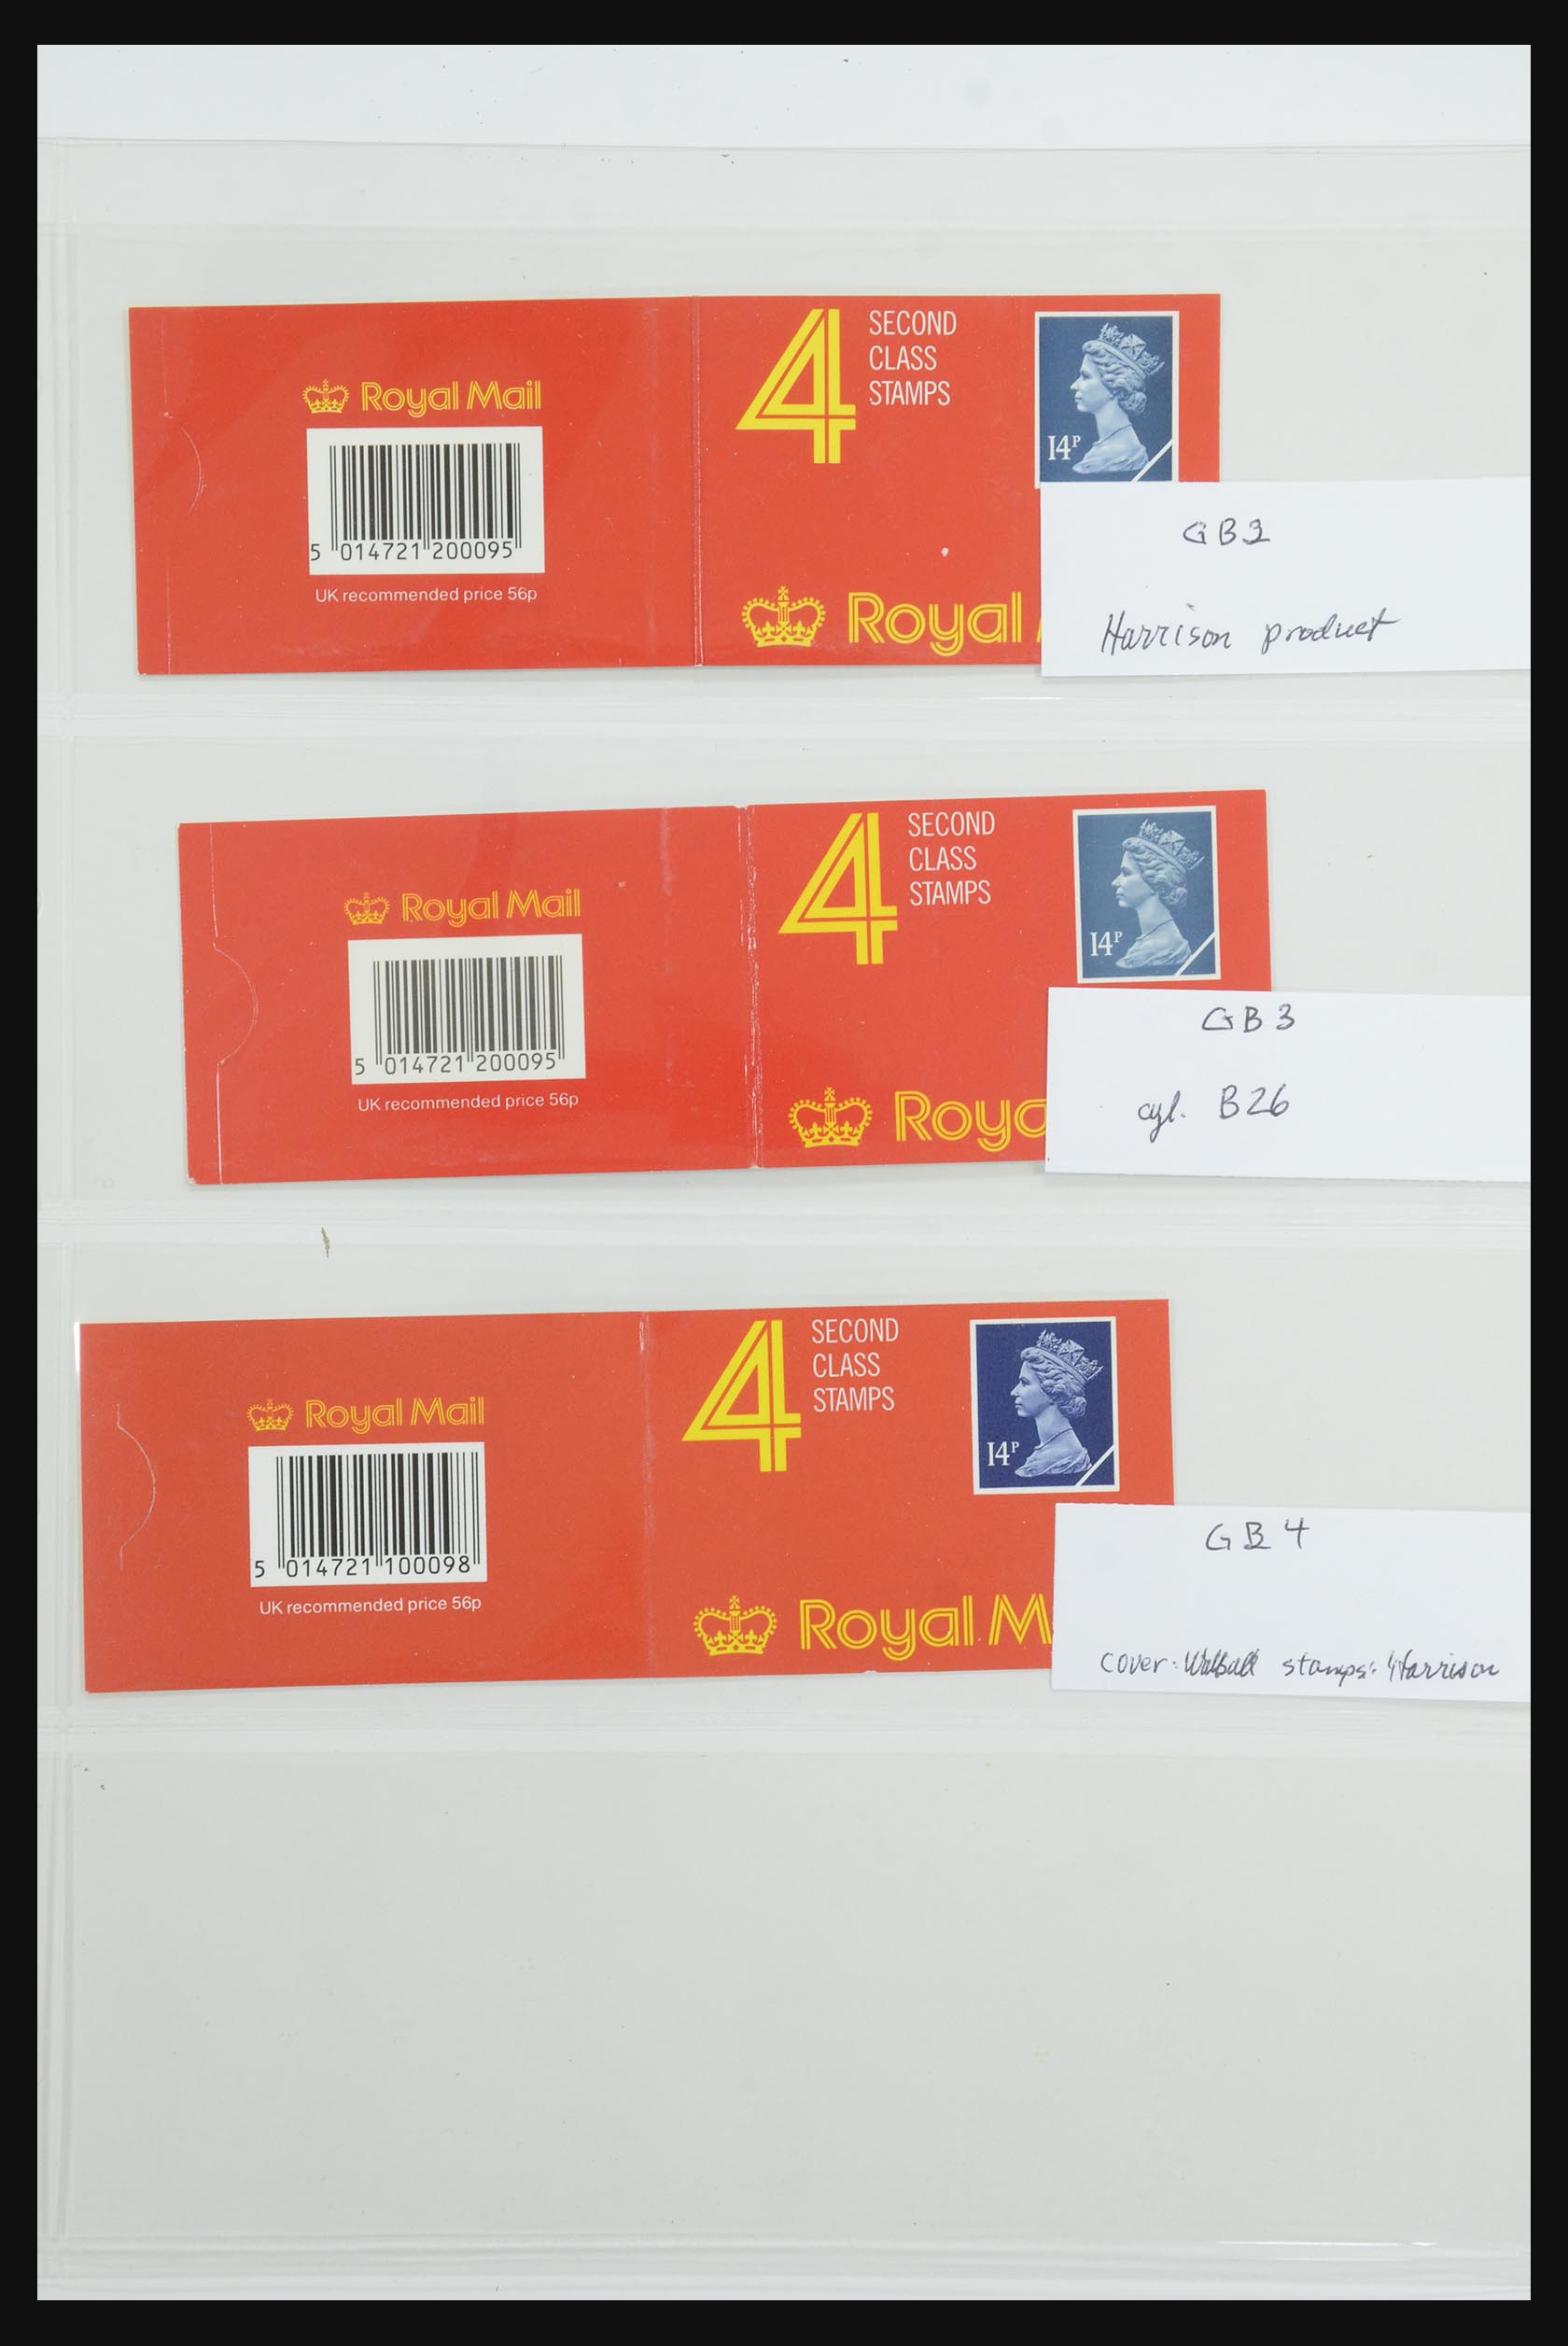 31959 009 - 31959 Great Britain stampbooklets 1987-2016!!